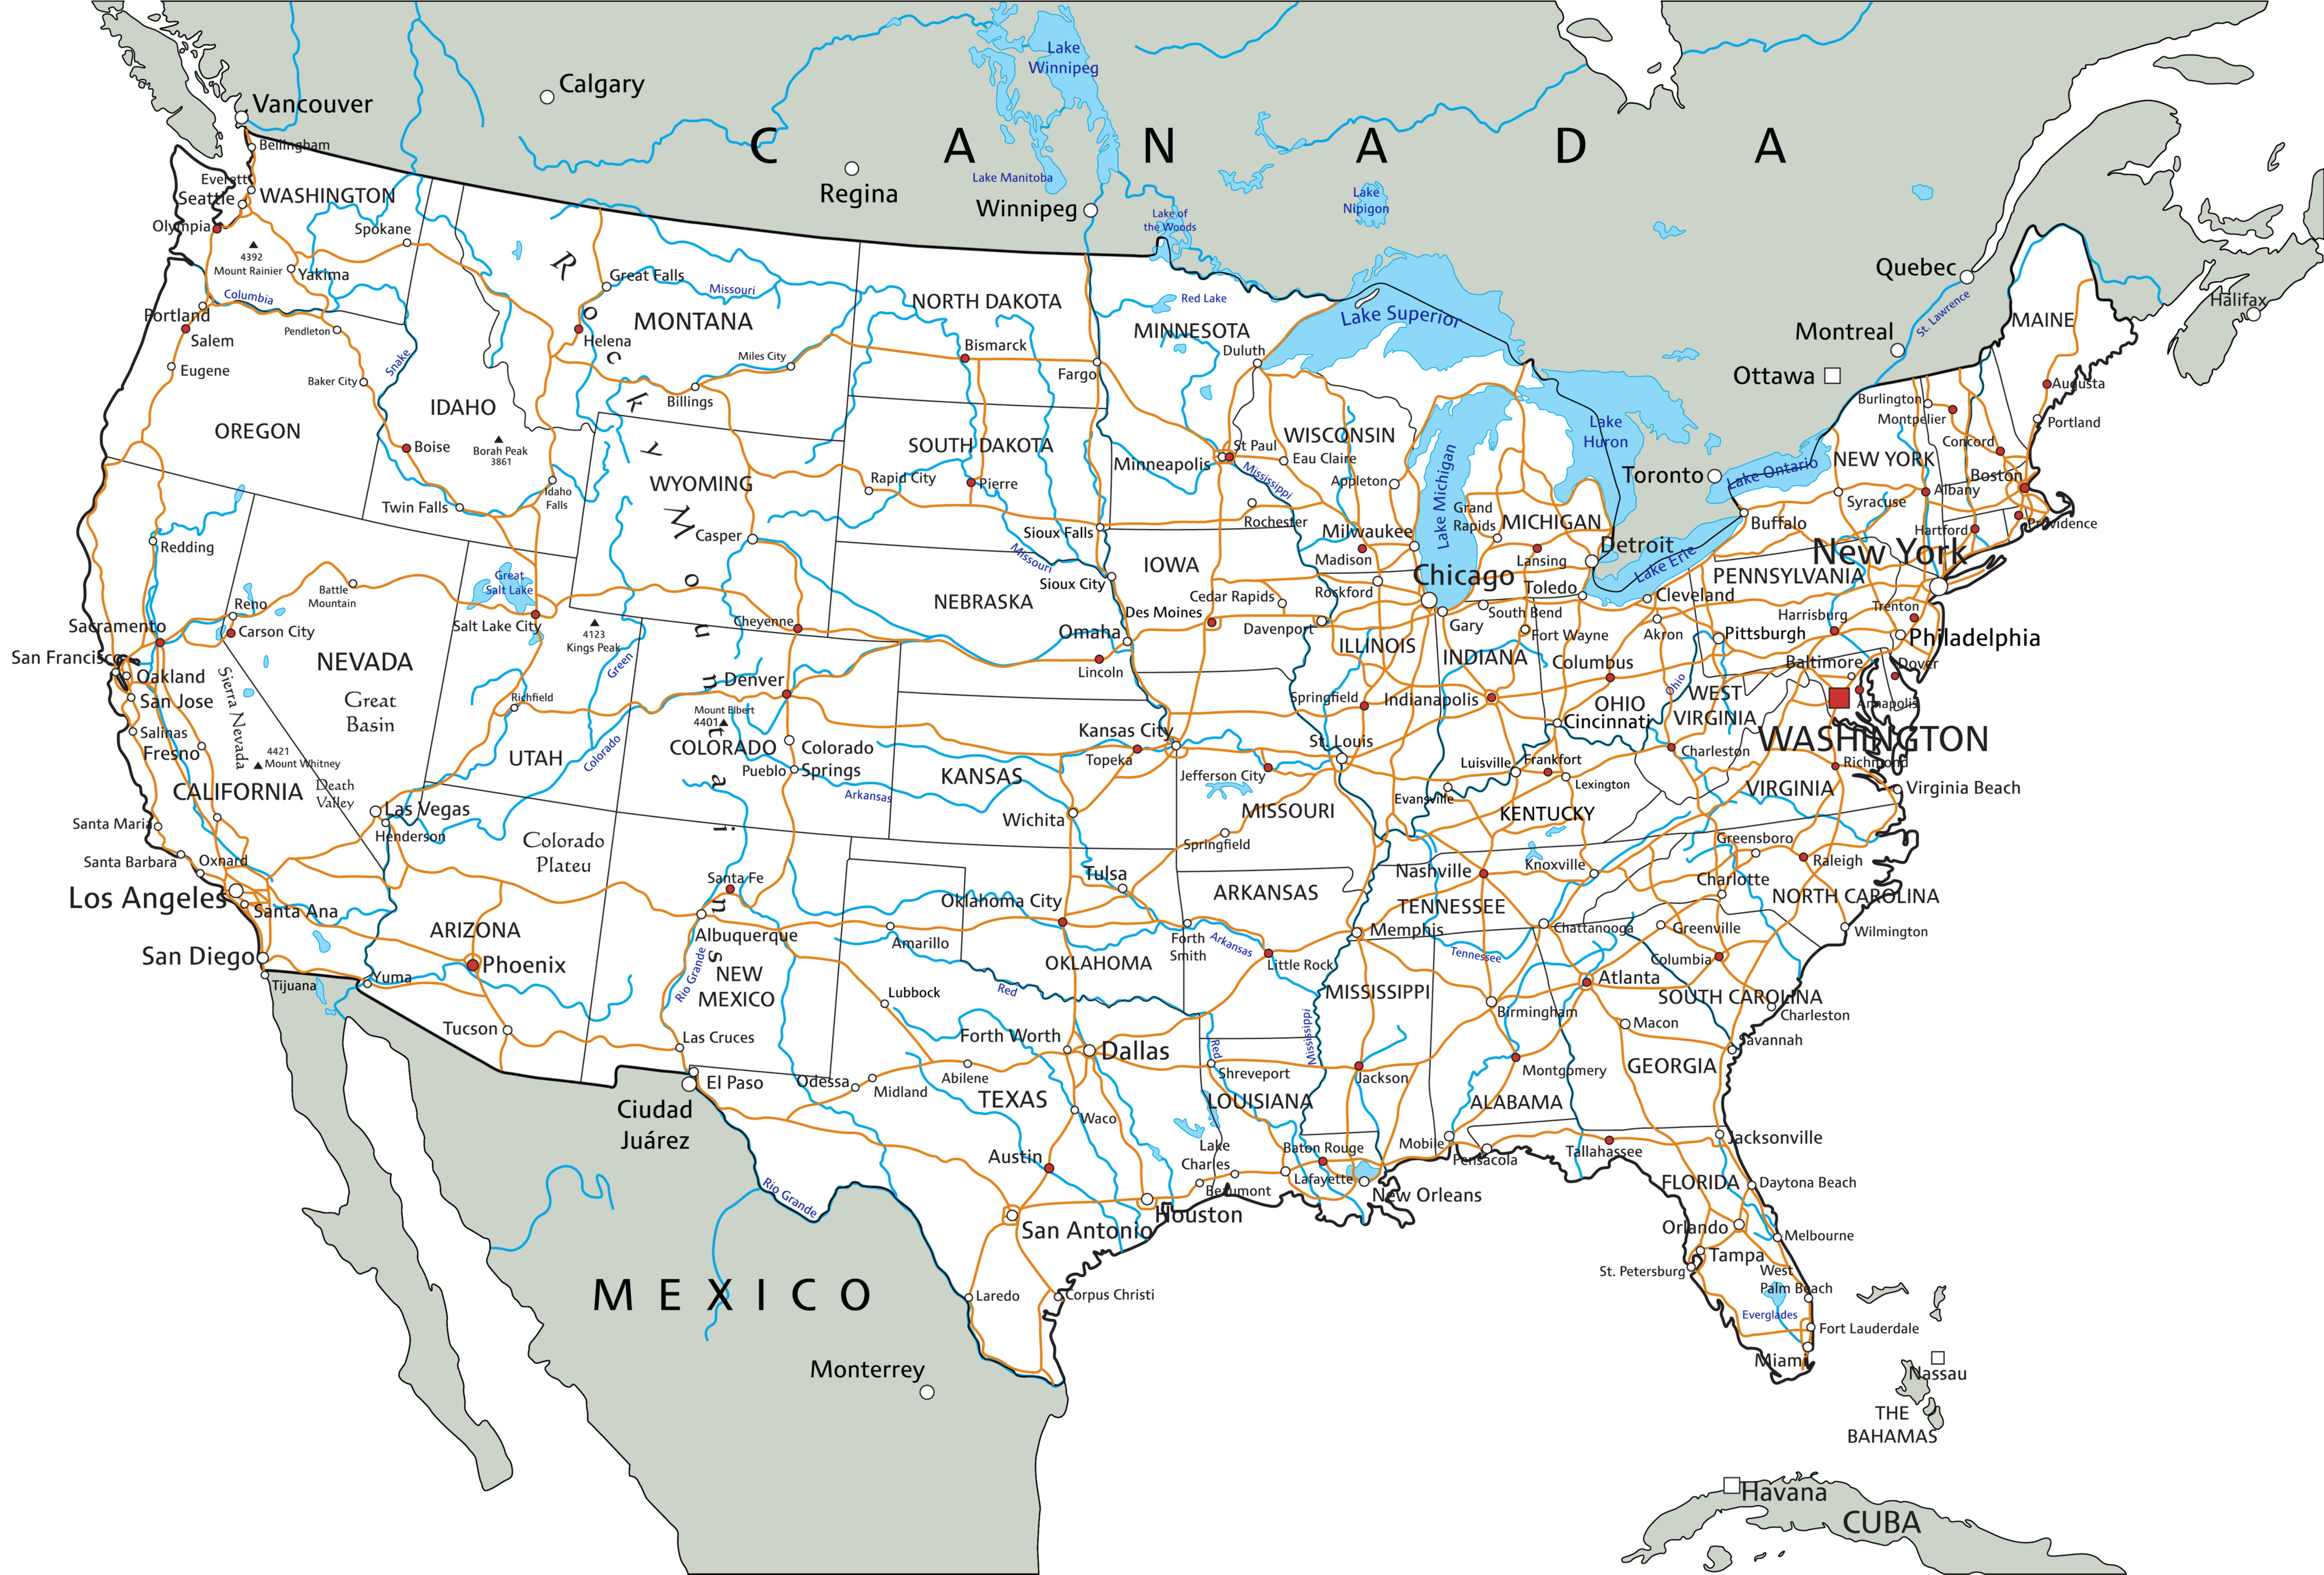 United States Road Atlas